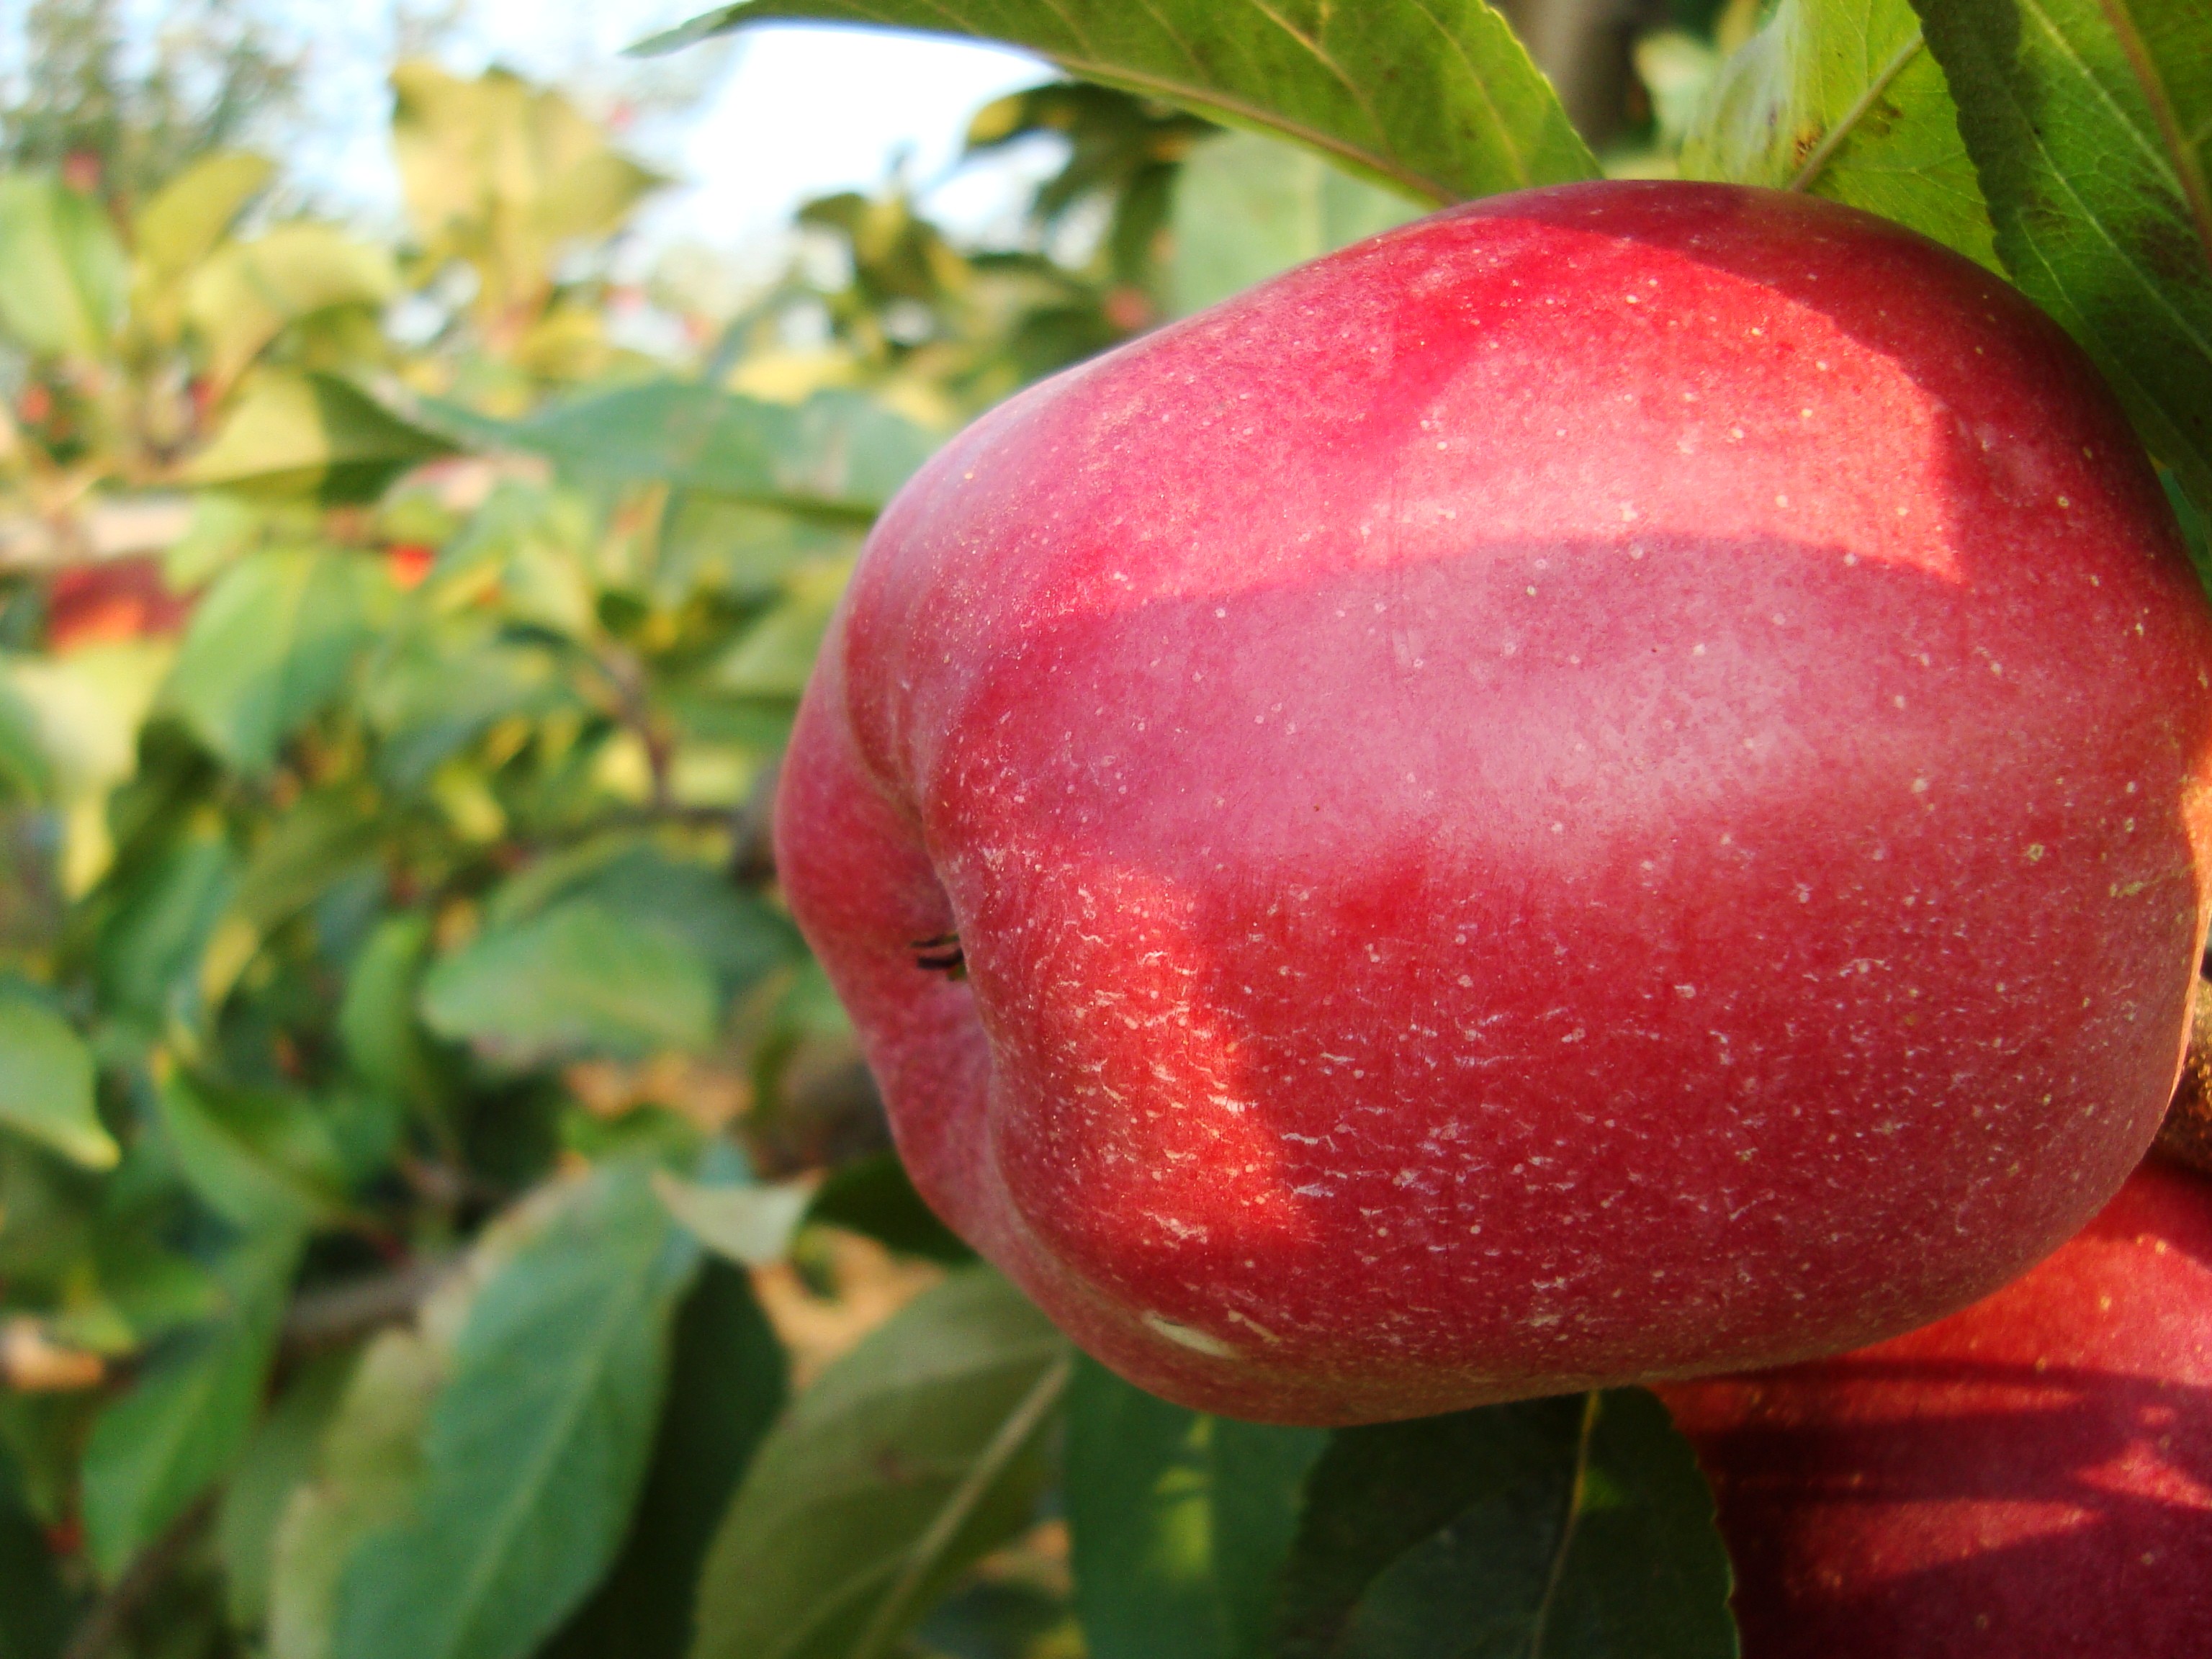 General 3072x2304 apples fruit outdoors plants food closeup